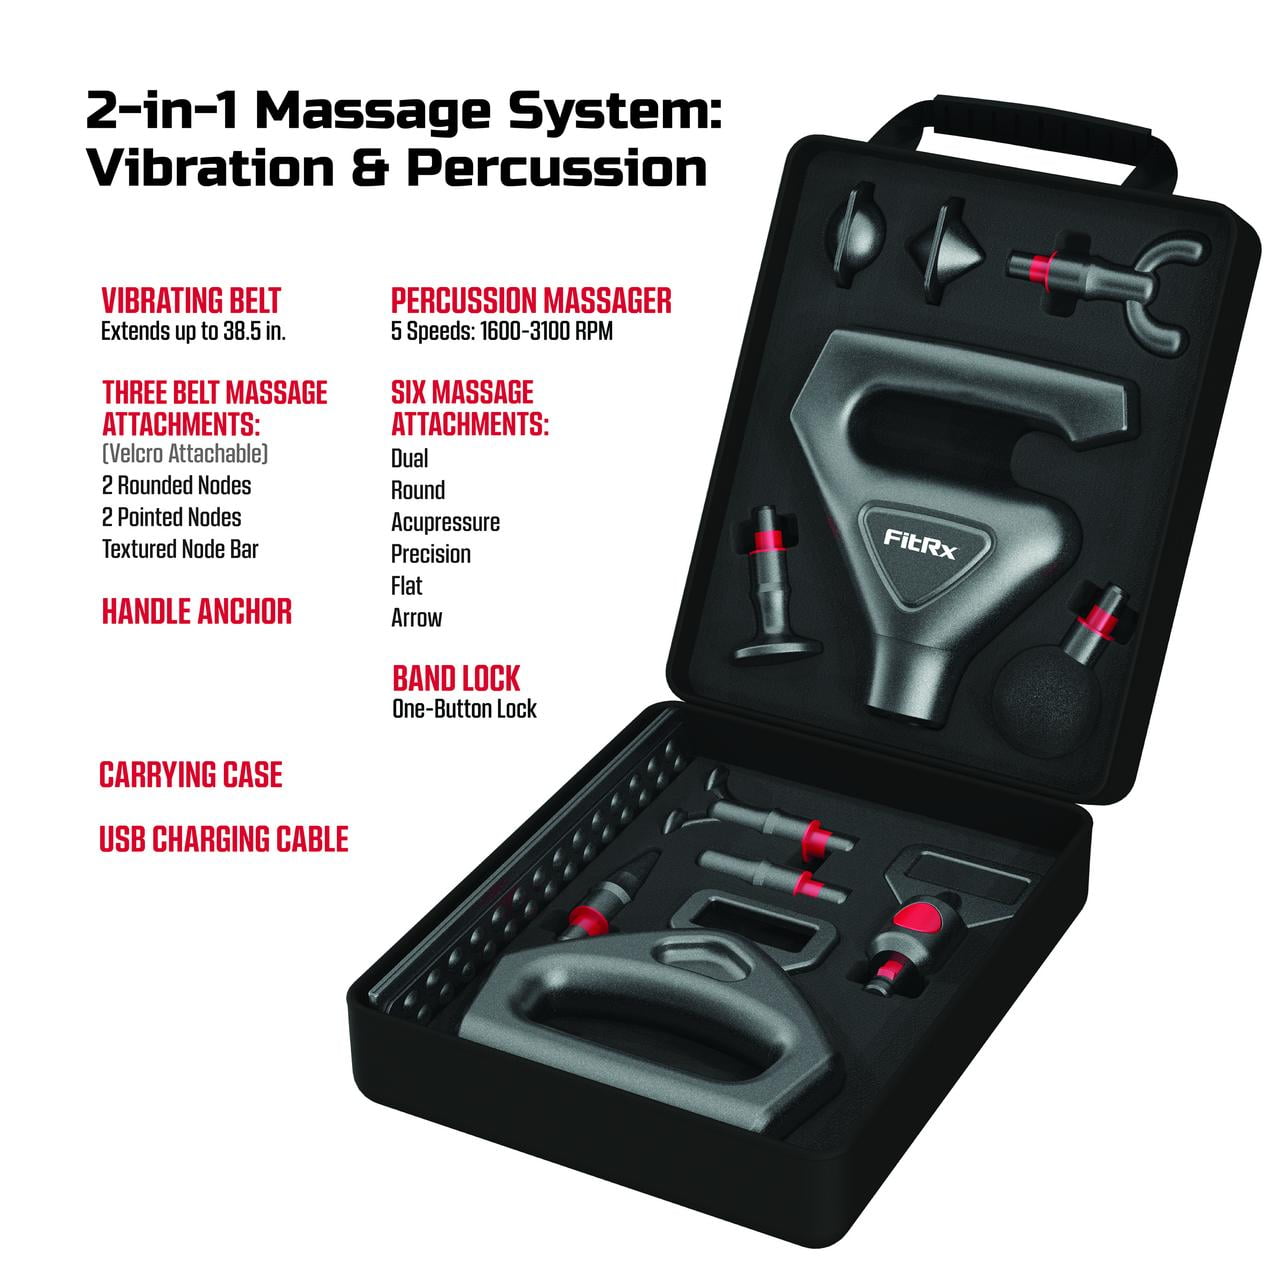 2-in-1 Full Body Vibrating Massage Belt and Percussion Massage Gun